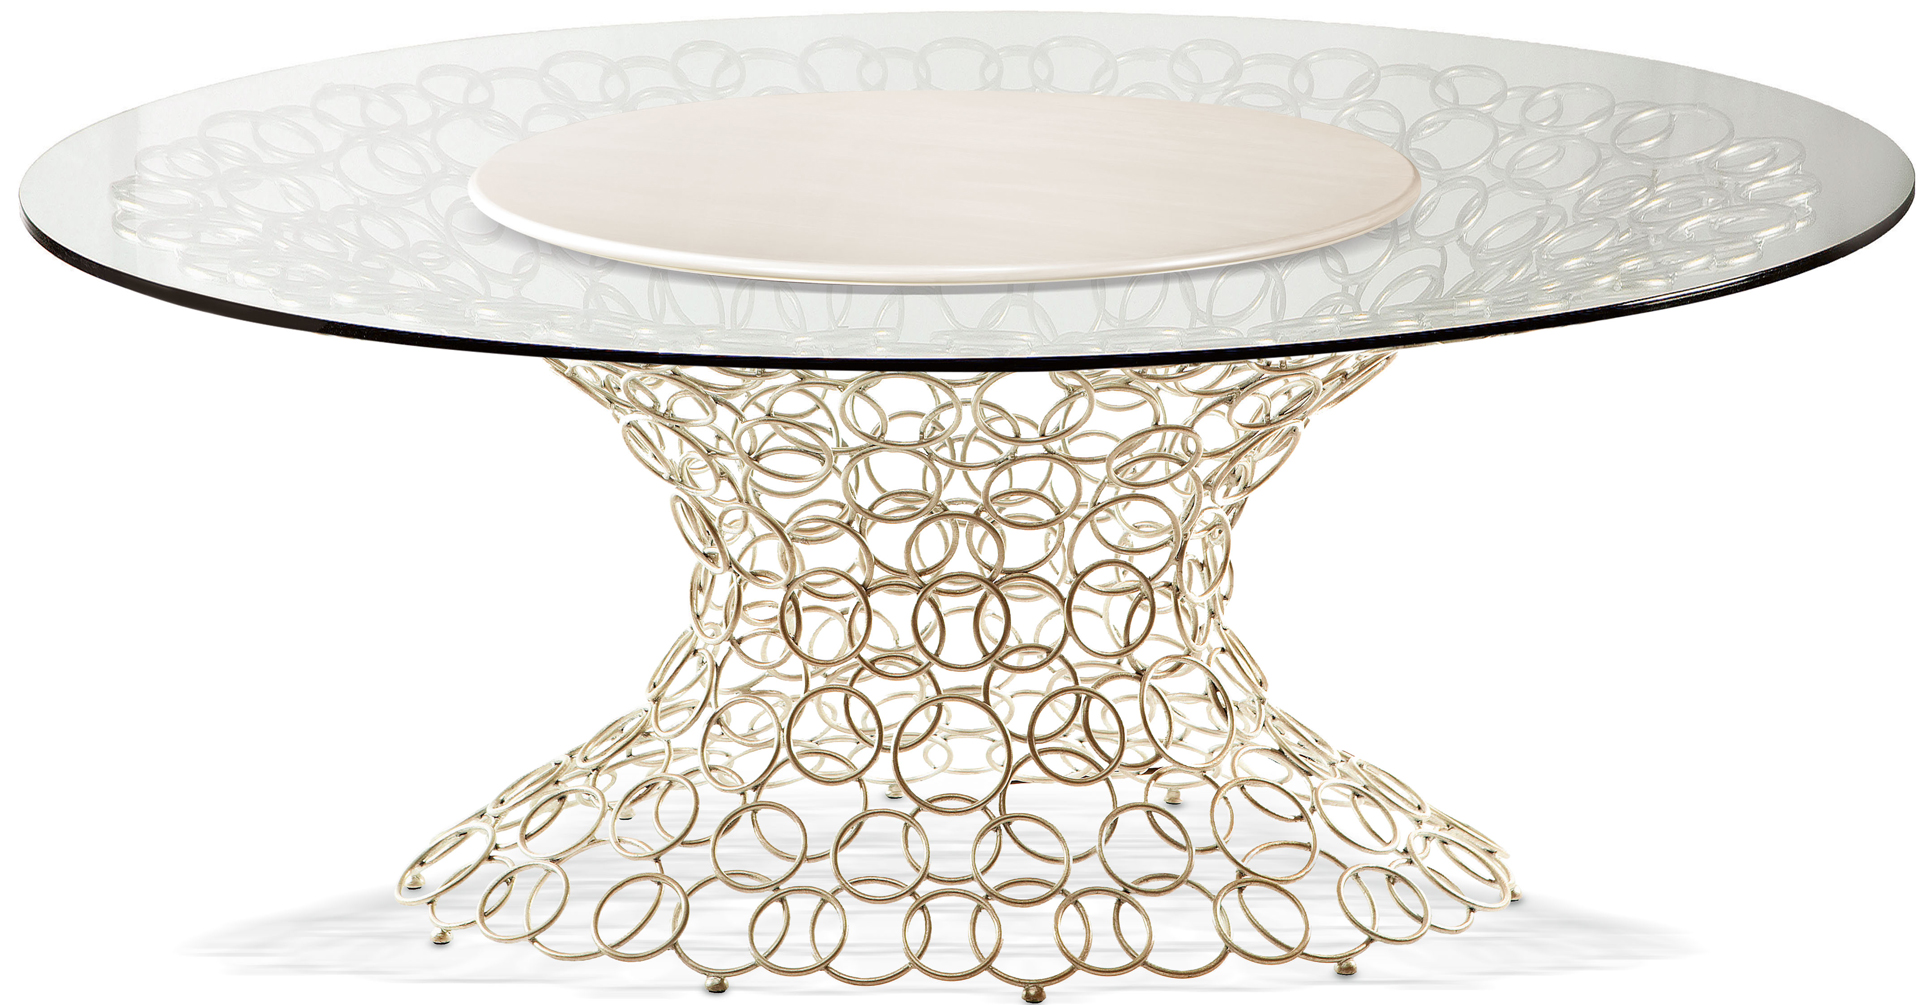 3190_mondrian-art-form-tavolo-round-table